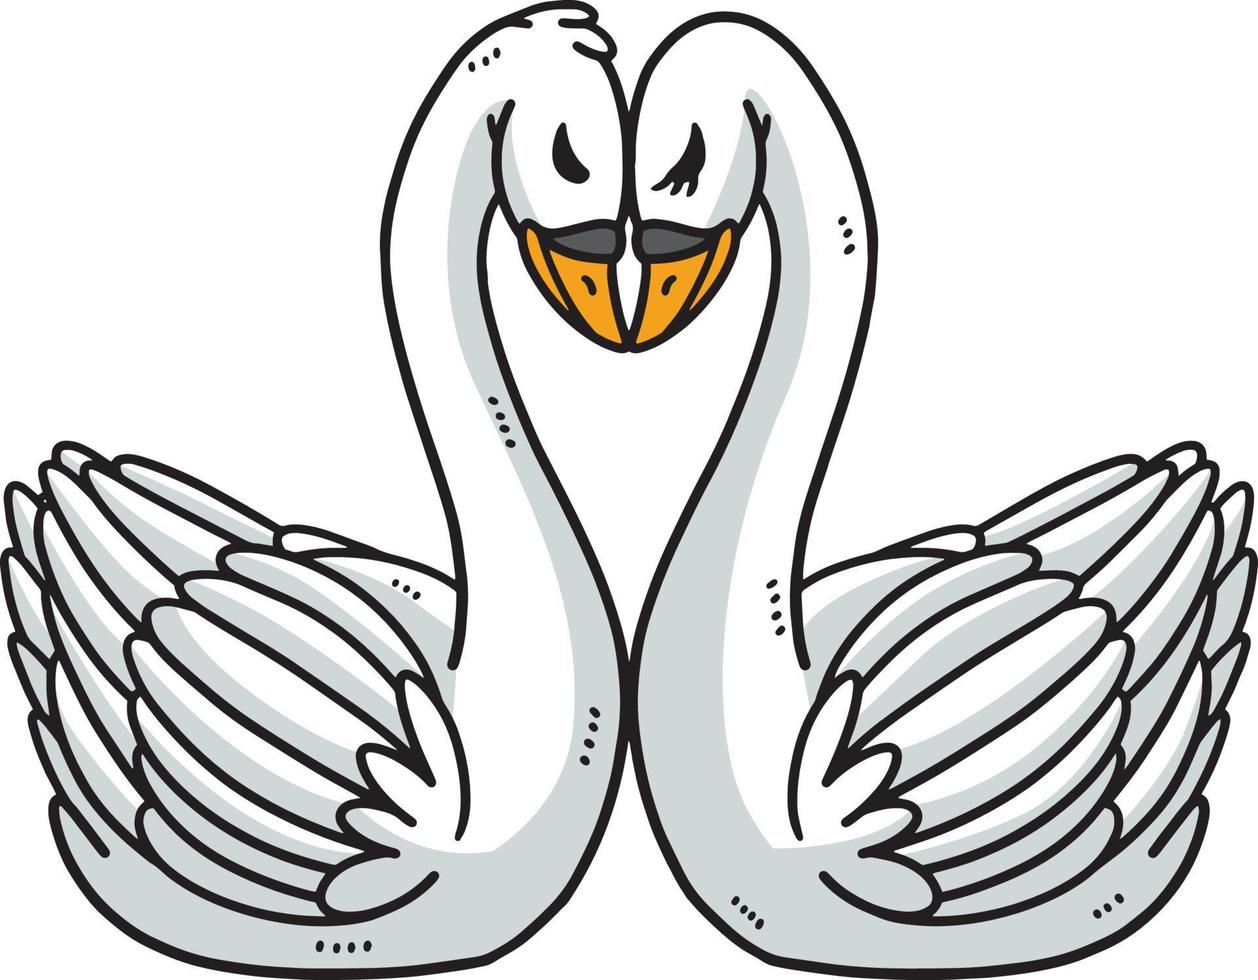 Love Swans Cartoon Colored Clipart Illustration vector